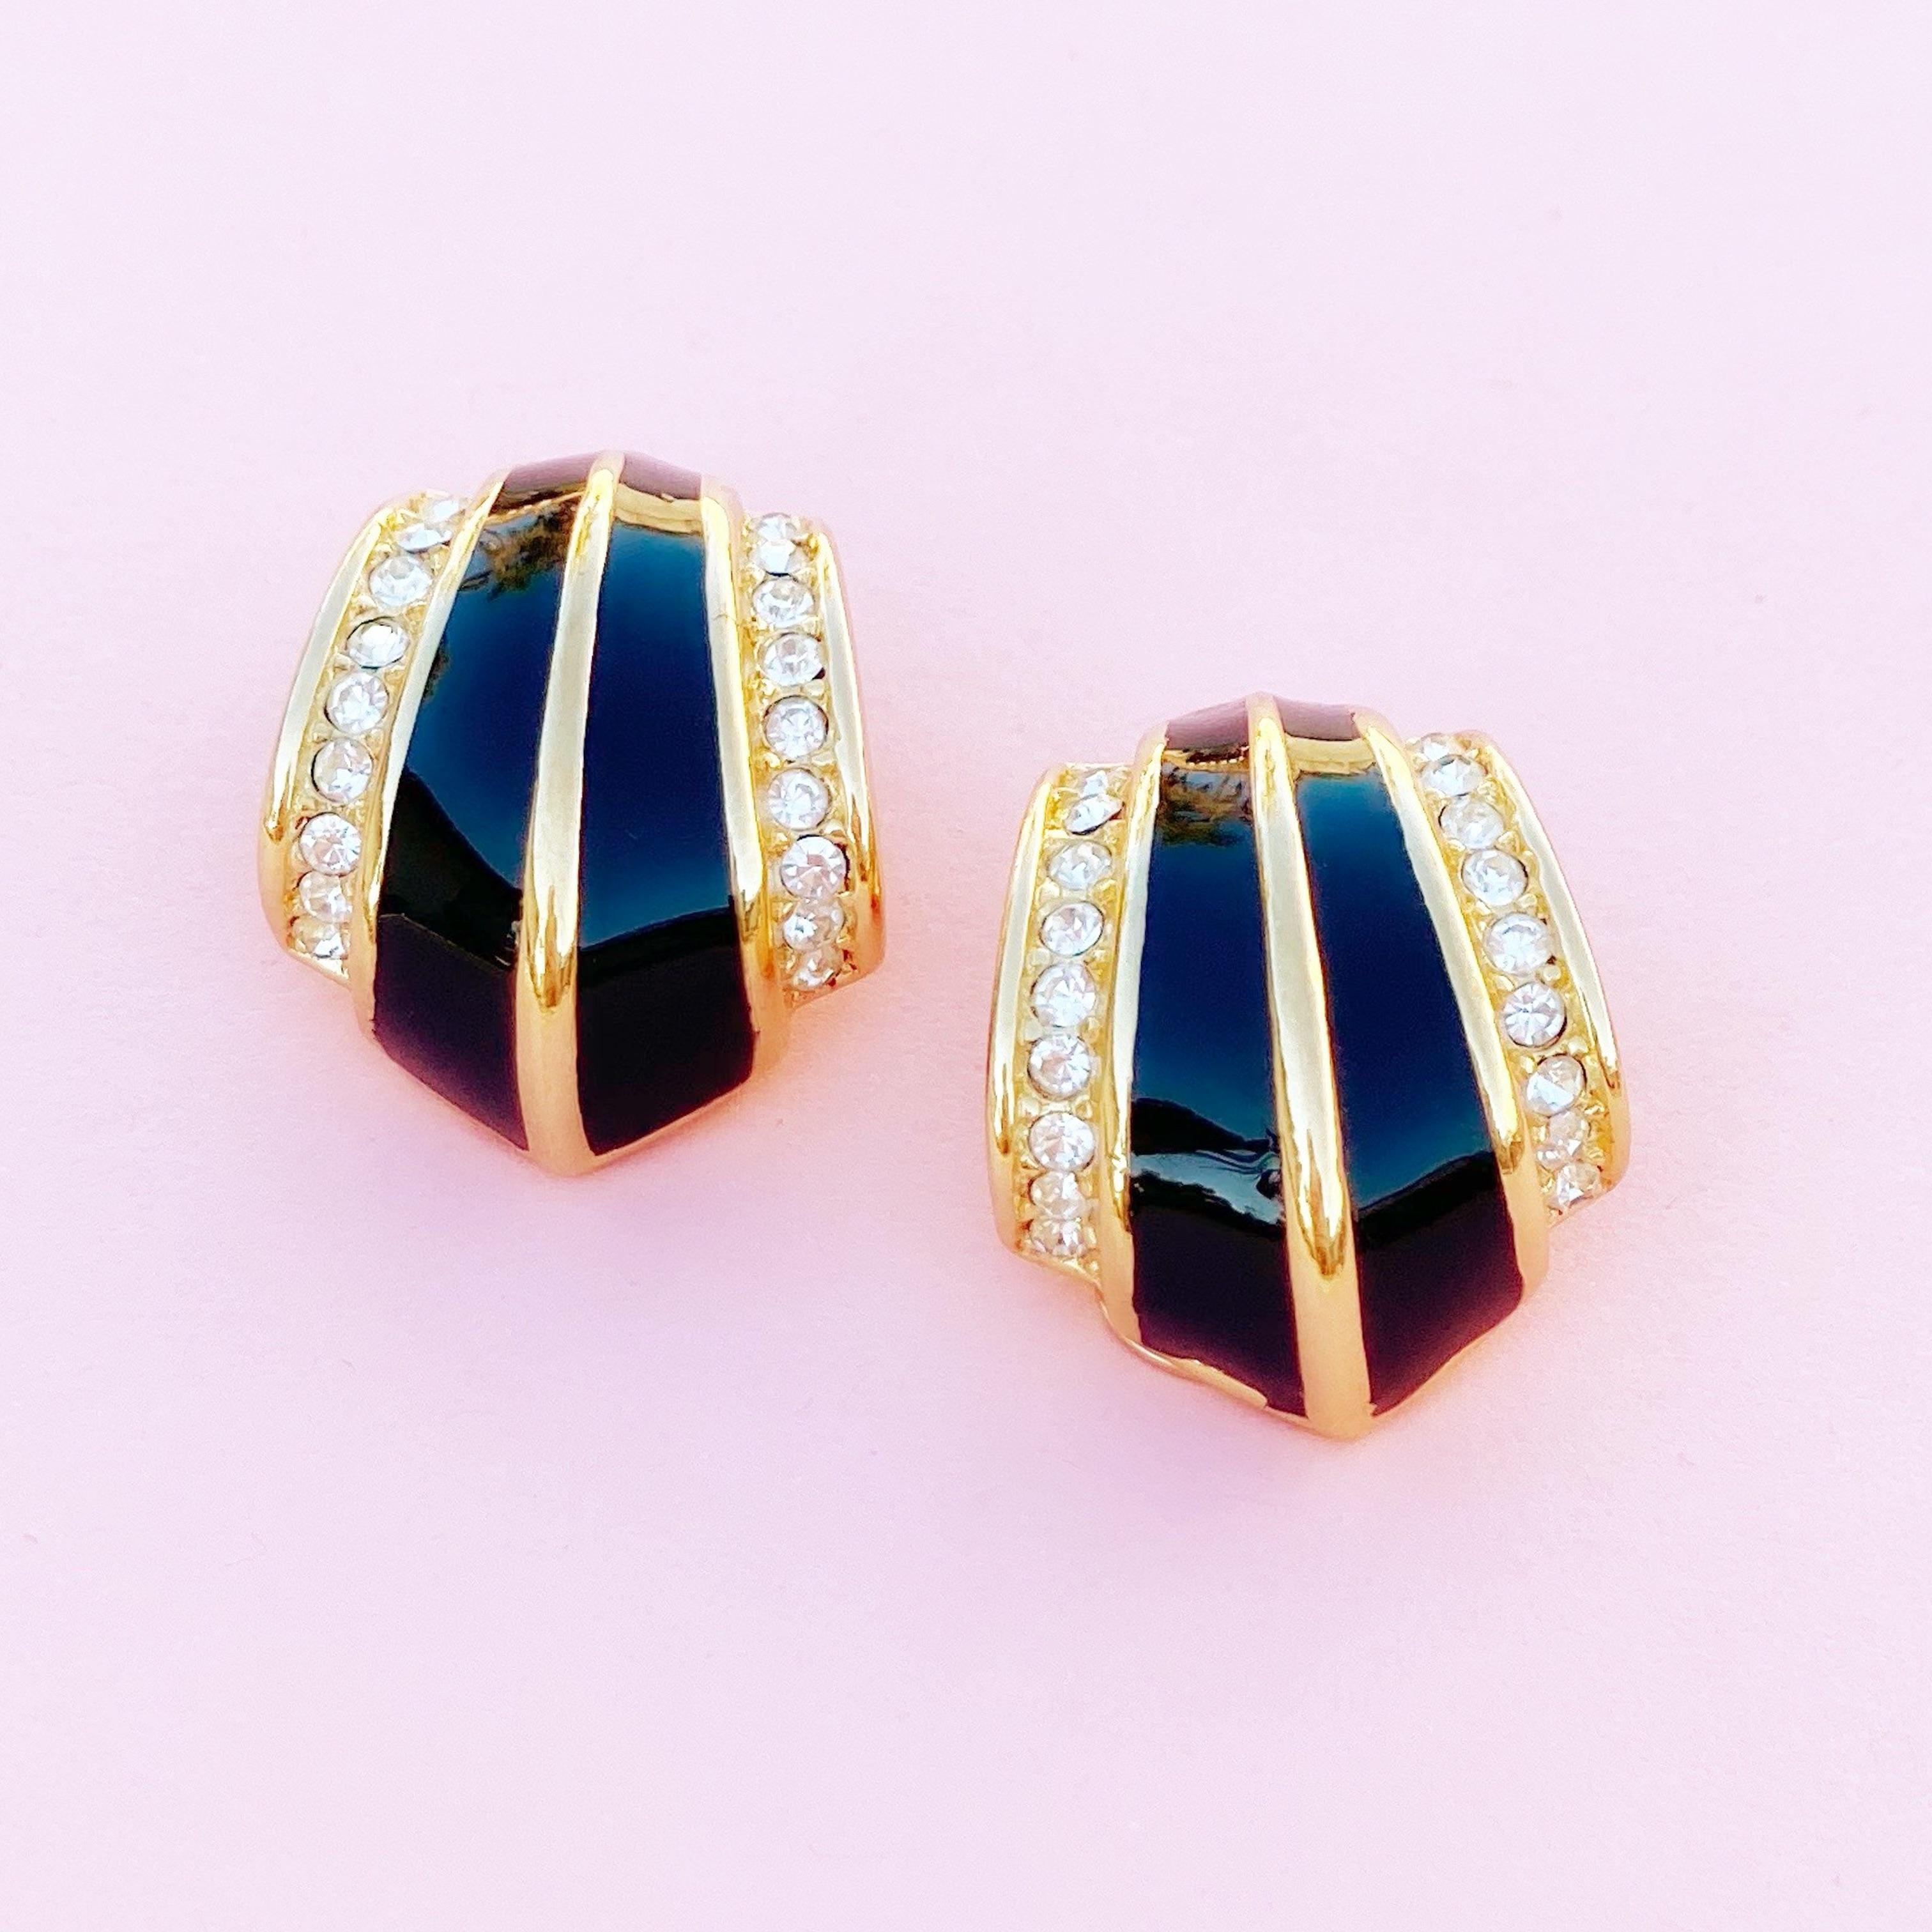 Modern Gilt & Black Enamel Art Deco Style Earrings w Crystals by Christian Dior, 1980s